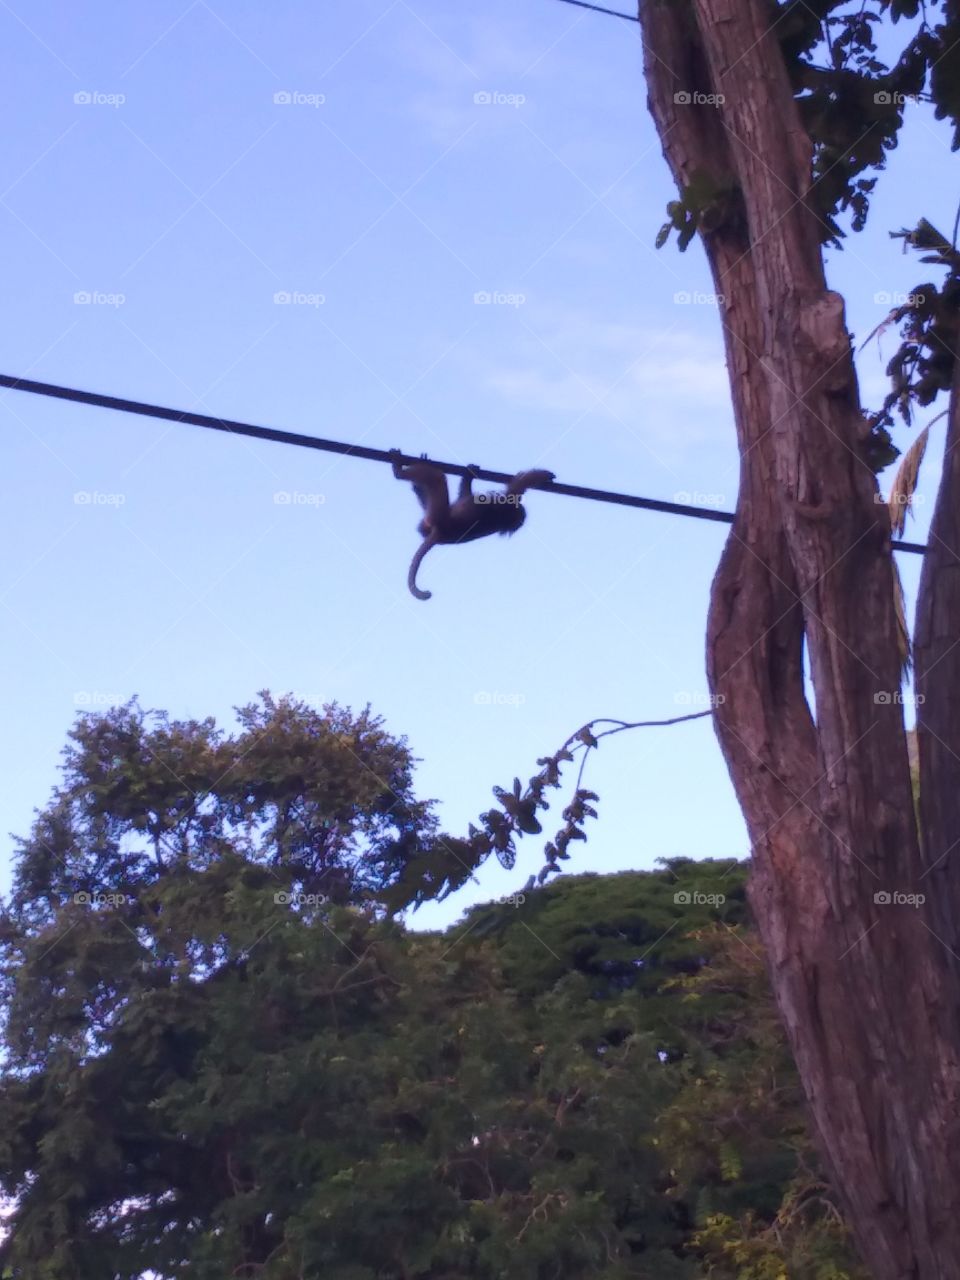 monkeys overhead. dusky langur monkeys in the trees and climbing on power lines